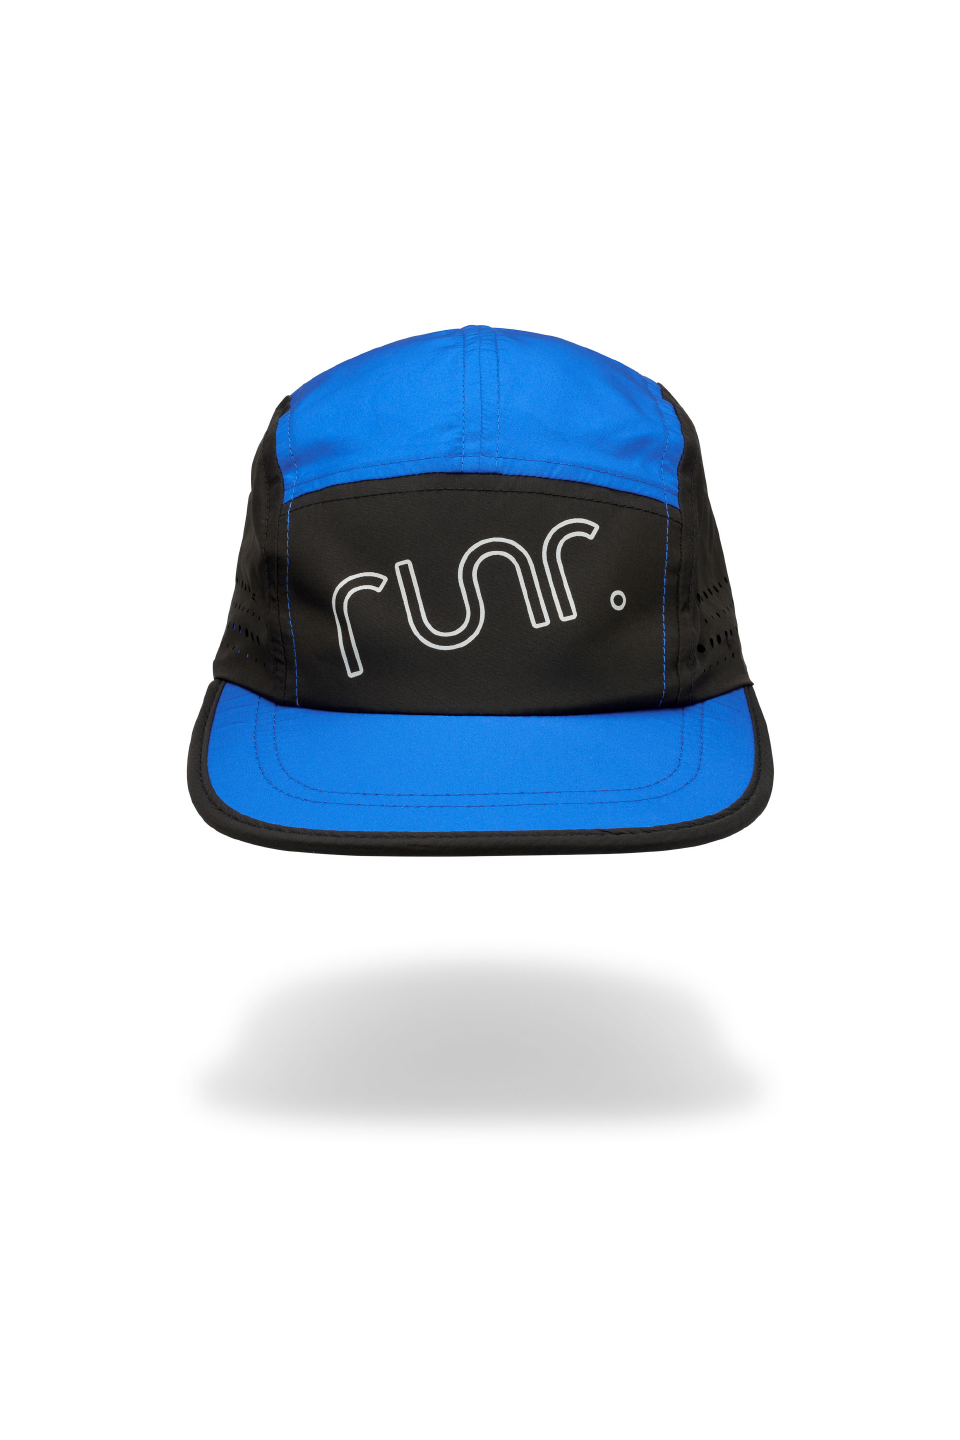 Runr Helsinki Technical Running Hat - Sole Mate